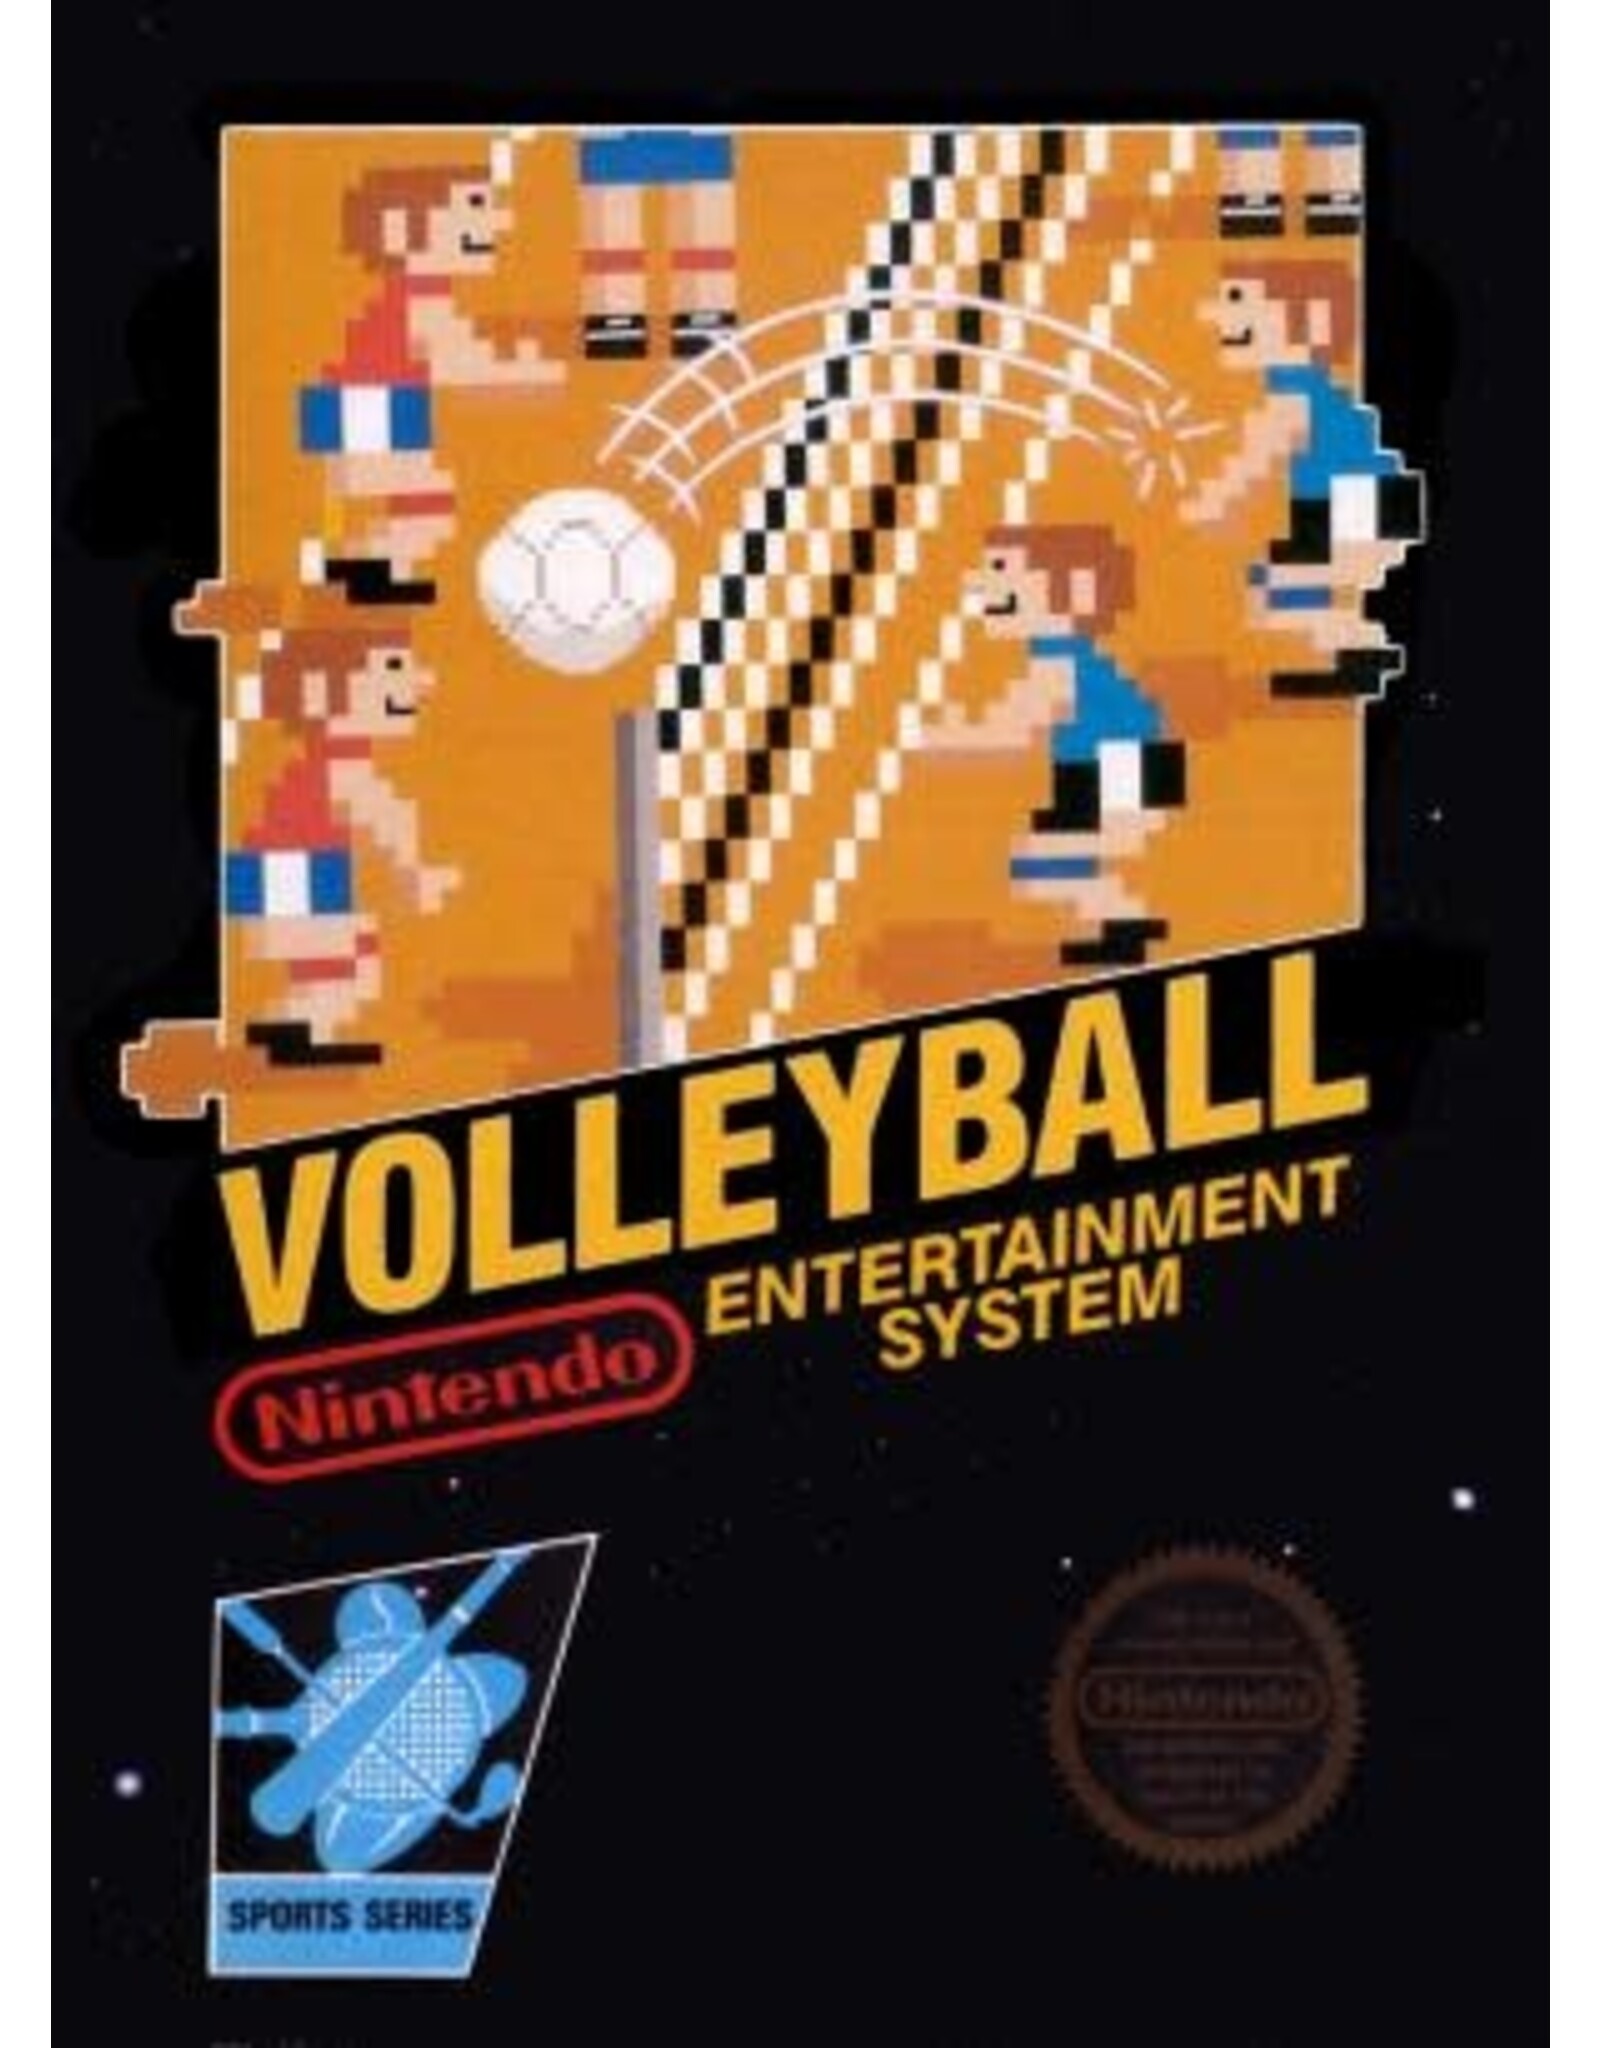 NES Volleyball (CiB, Heavily Damaged Box and Manual)